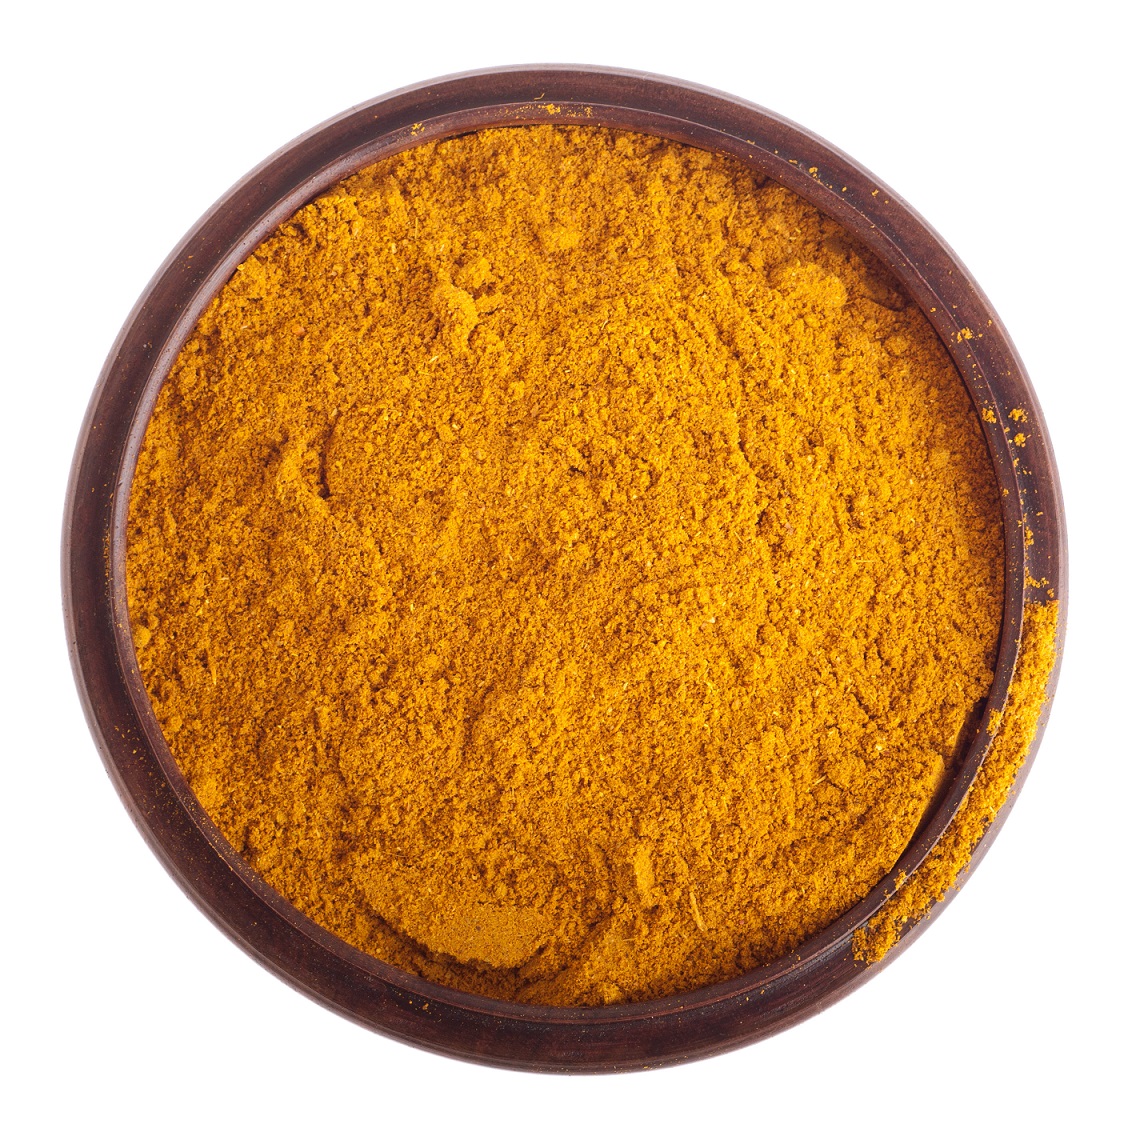 Arjuna's BCM-95 is a proprietary combination of curcuminoids and essential oil of turmeric-ar-turmerone